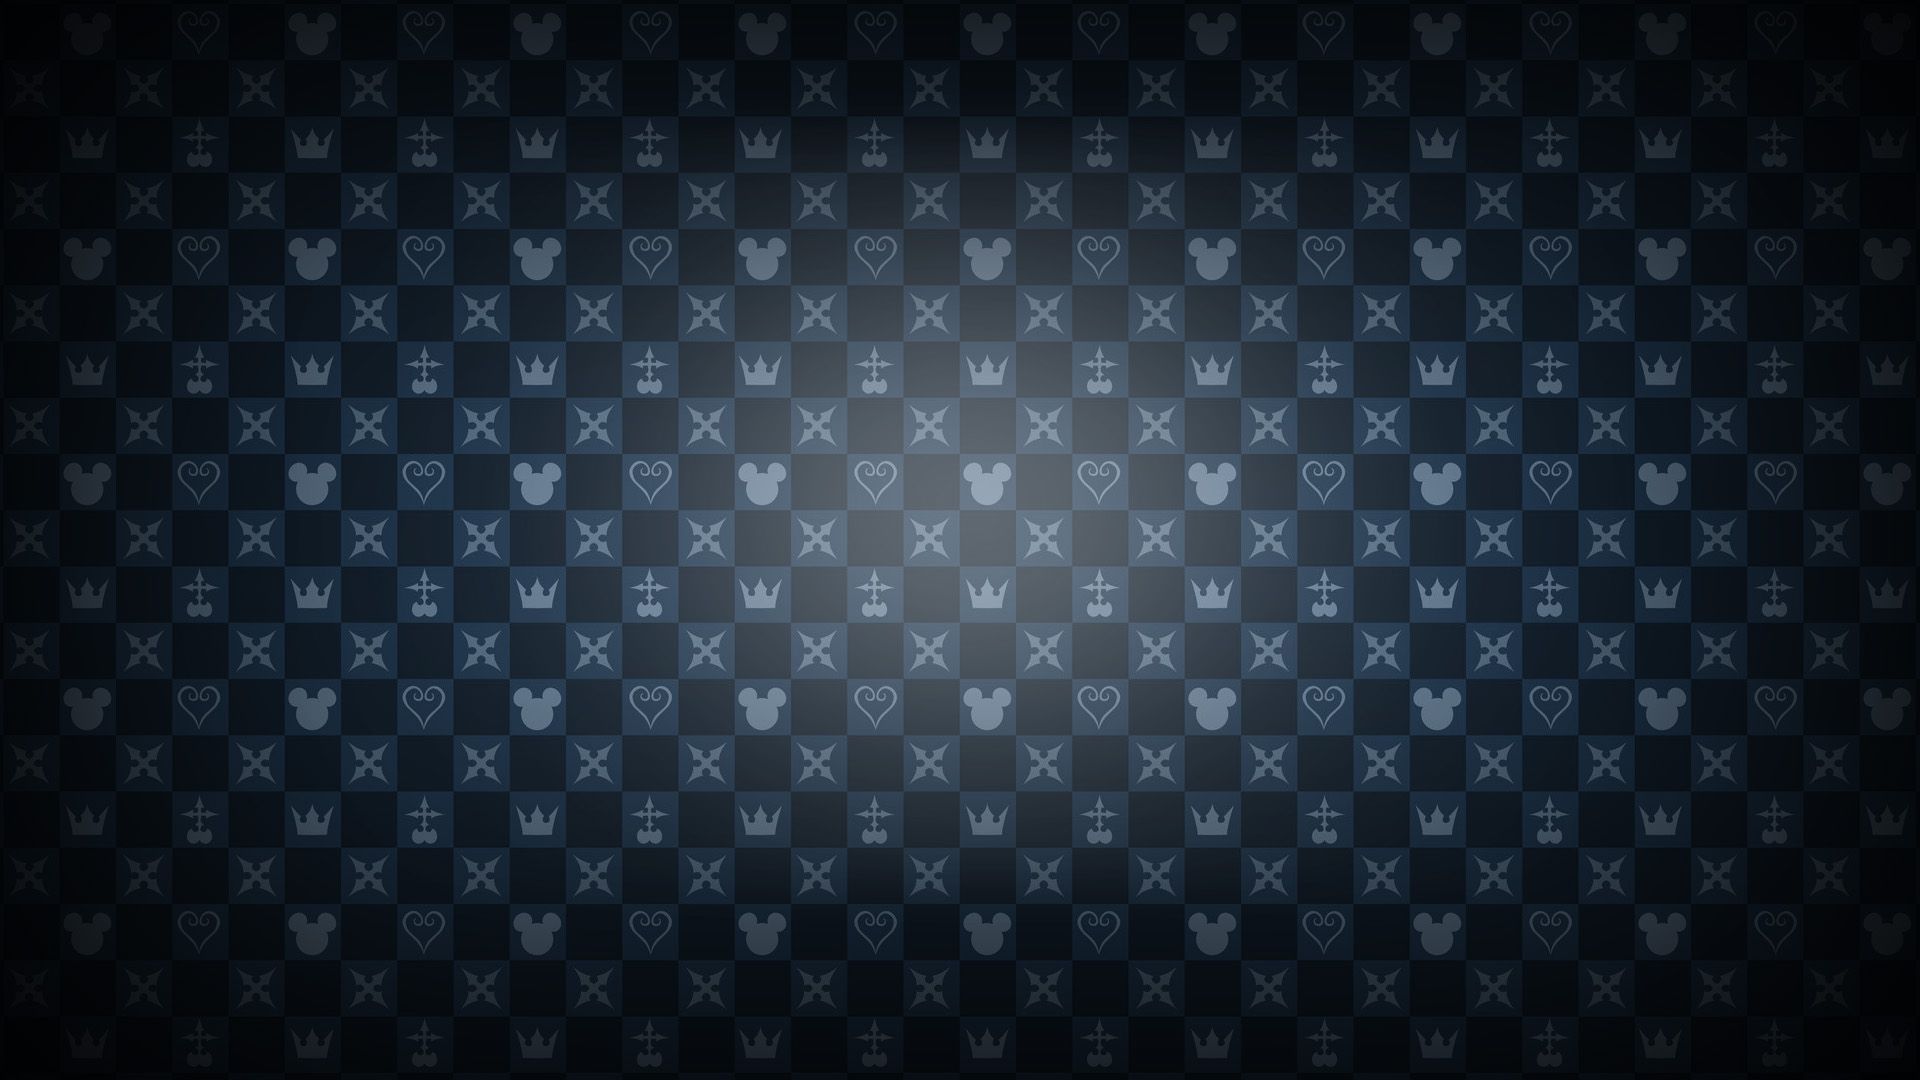 Kingdom Hearts pattern wallpaper   1023871